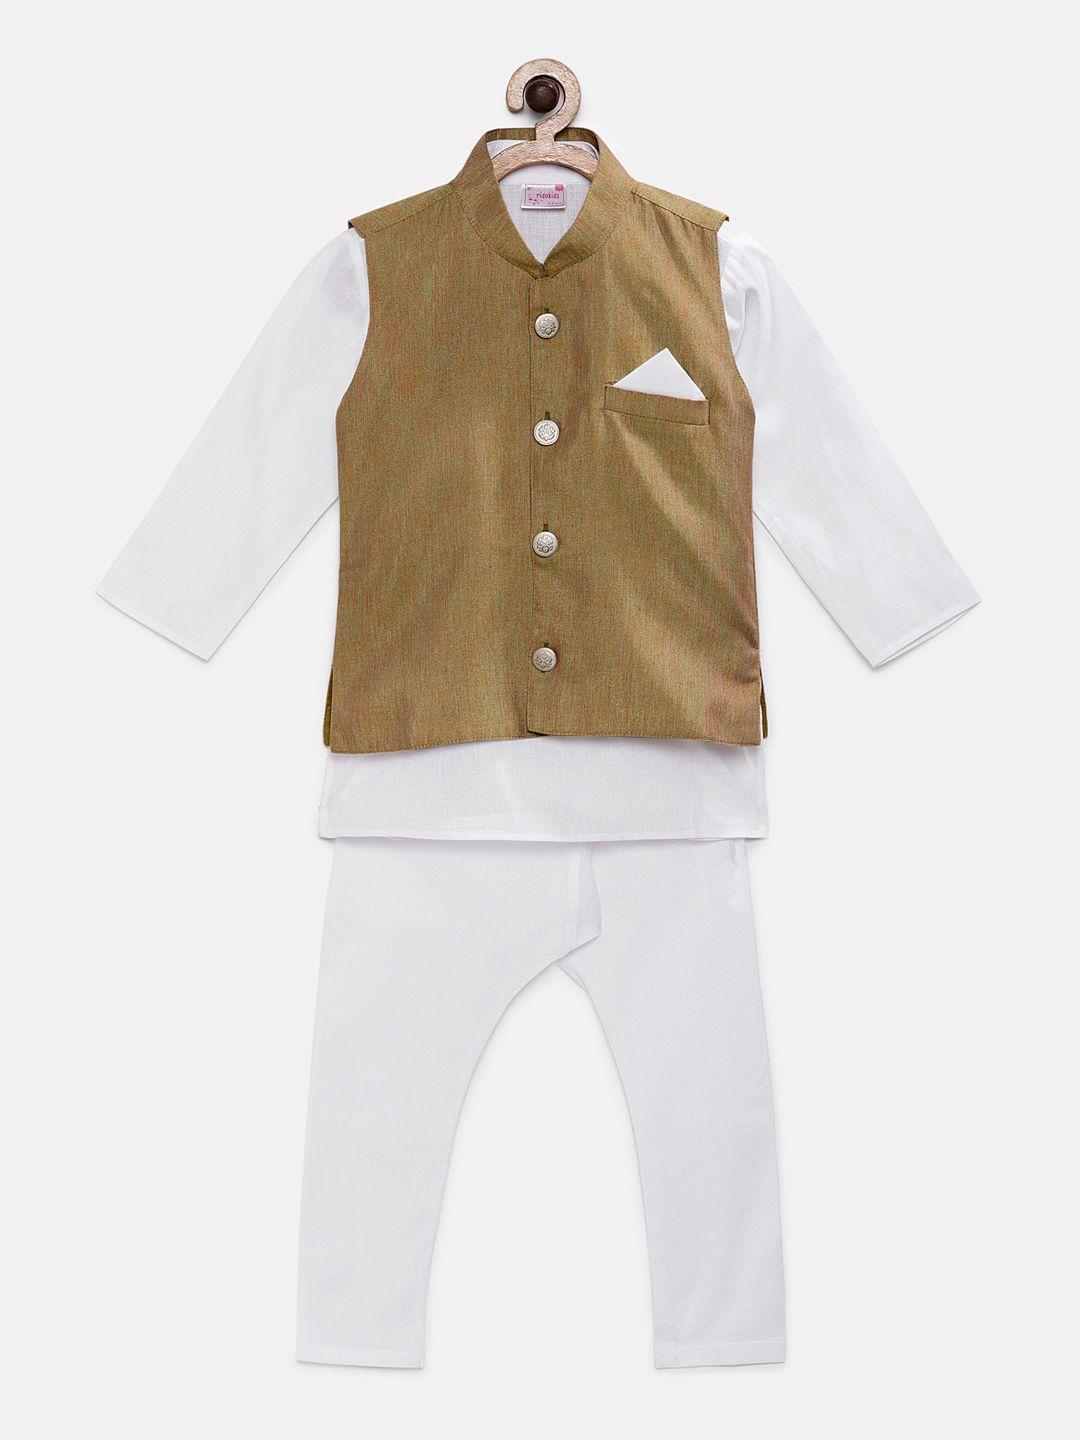 ridokidz boys white & green solid kurta with pyjamas & nehru jacket